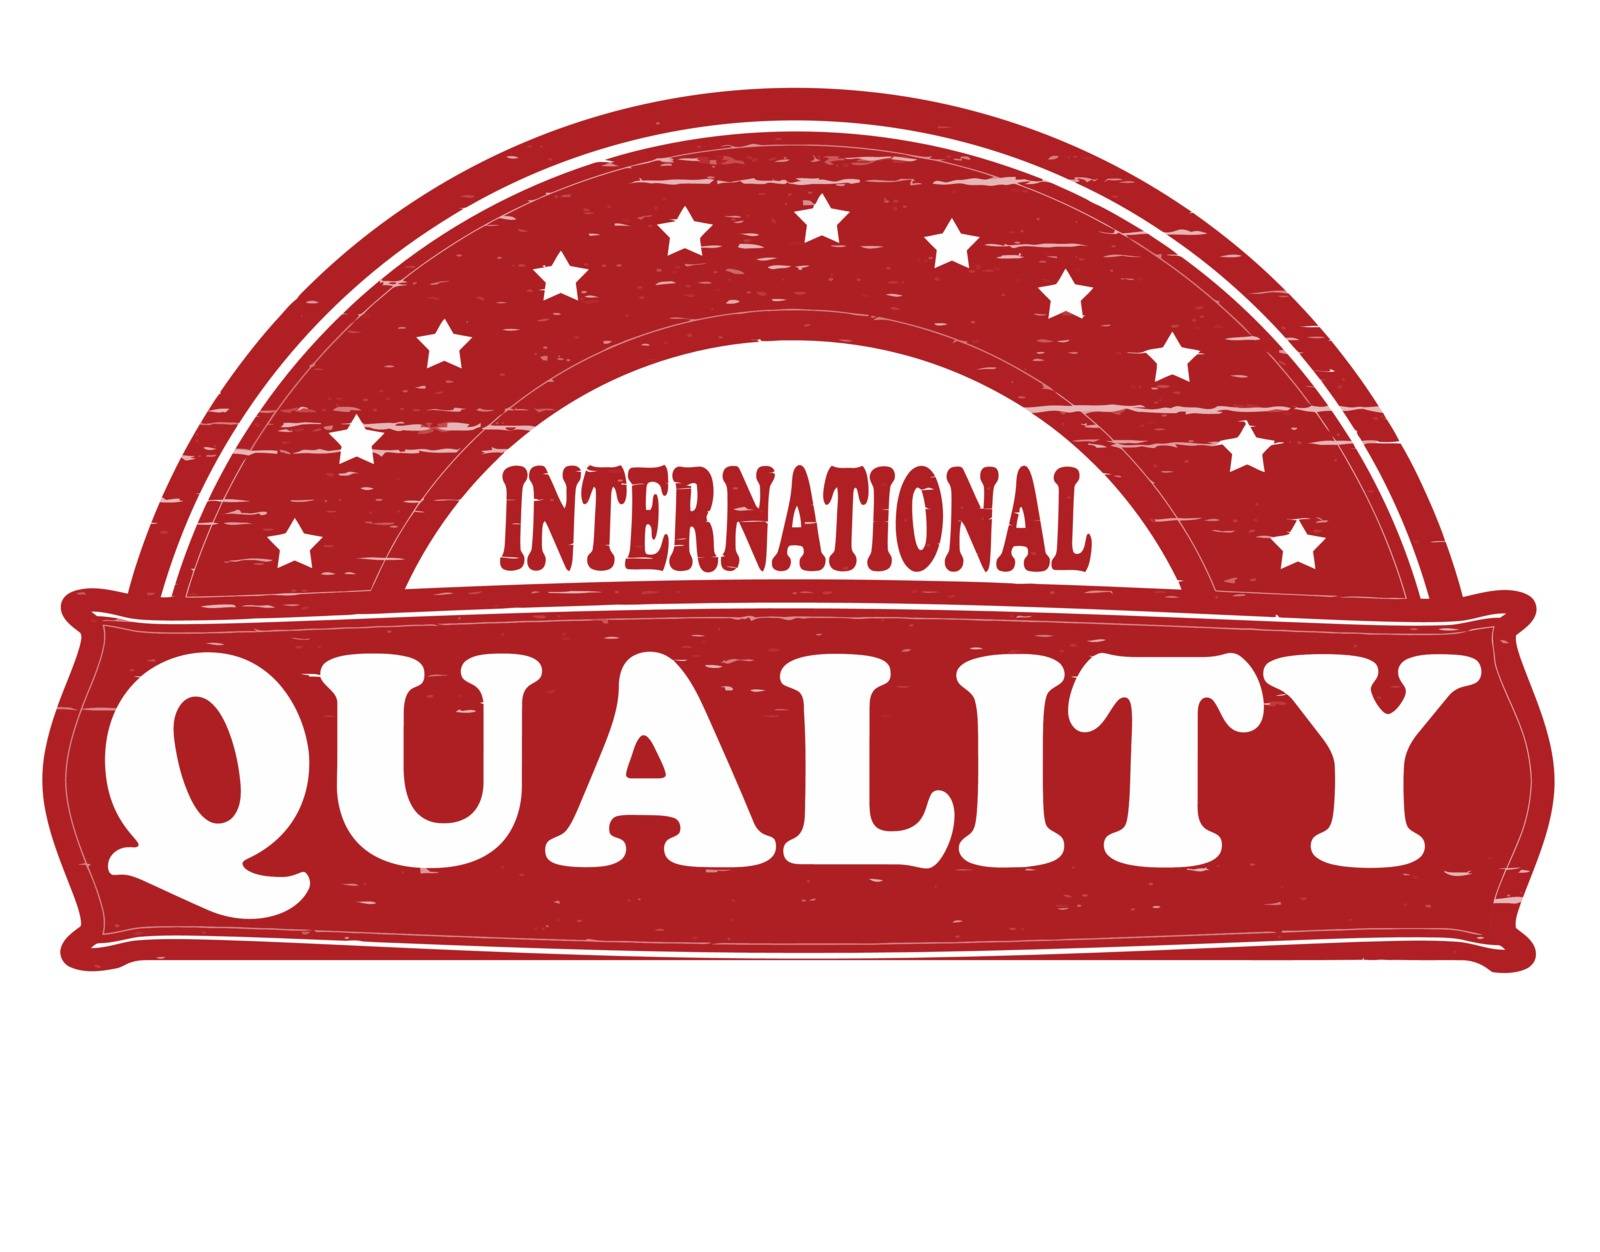 International quality by carmenbobo